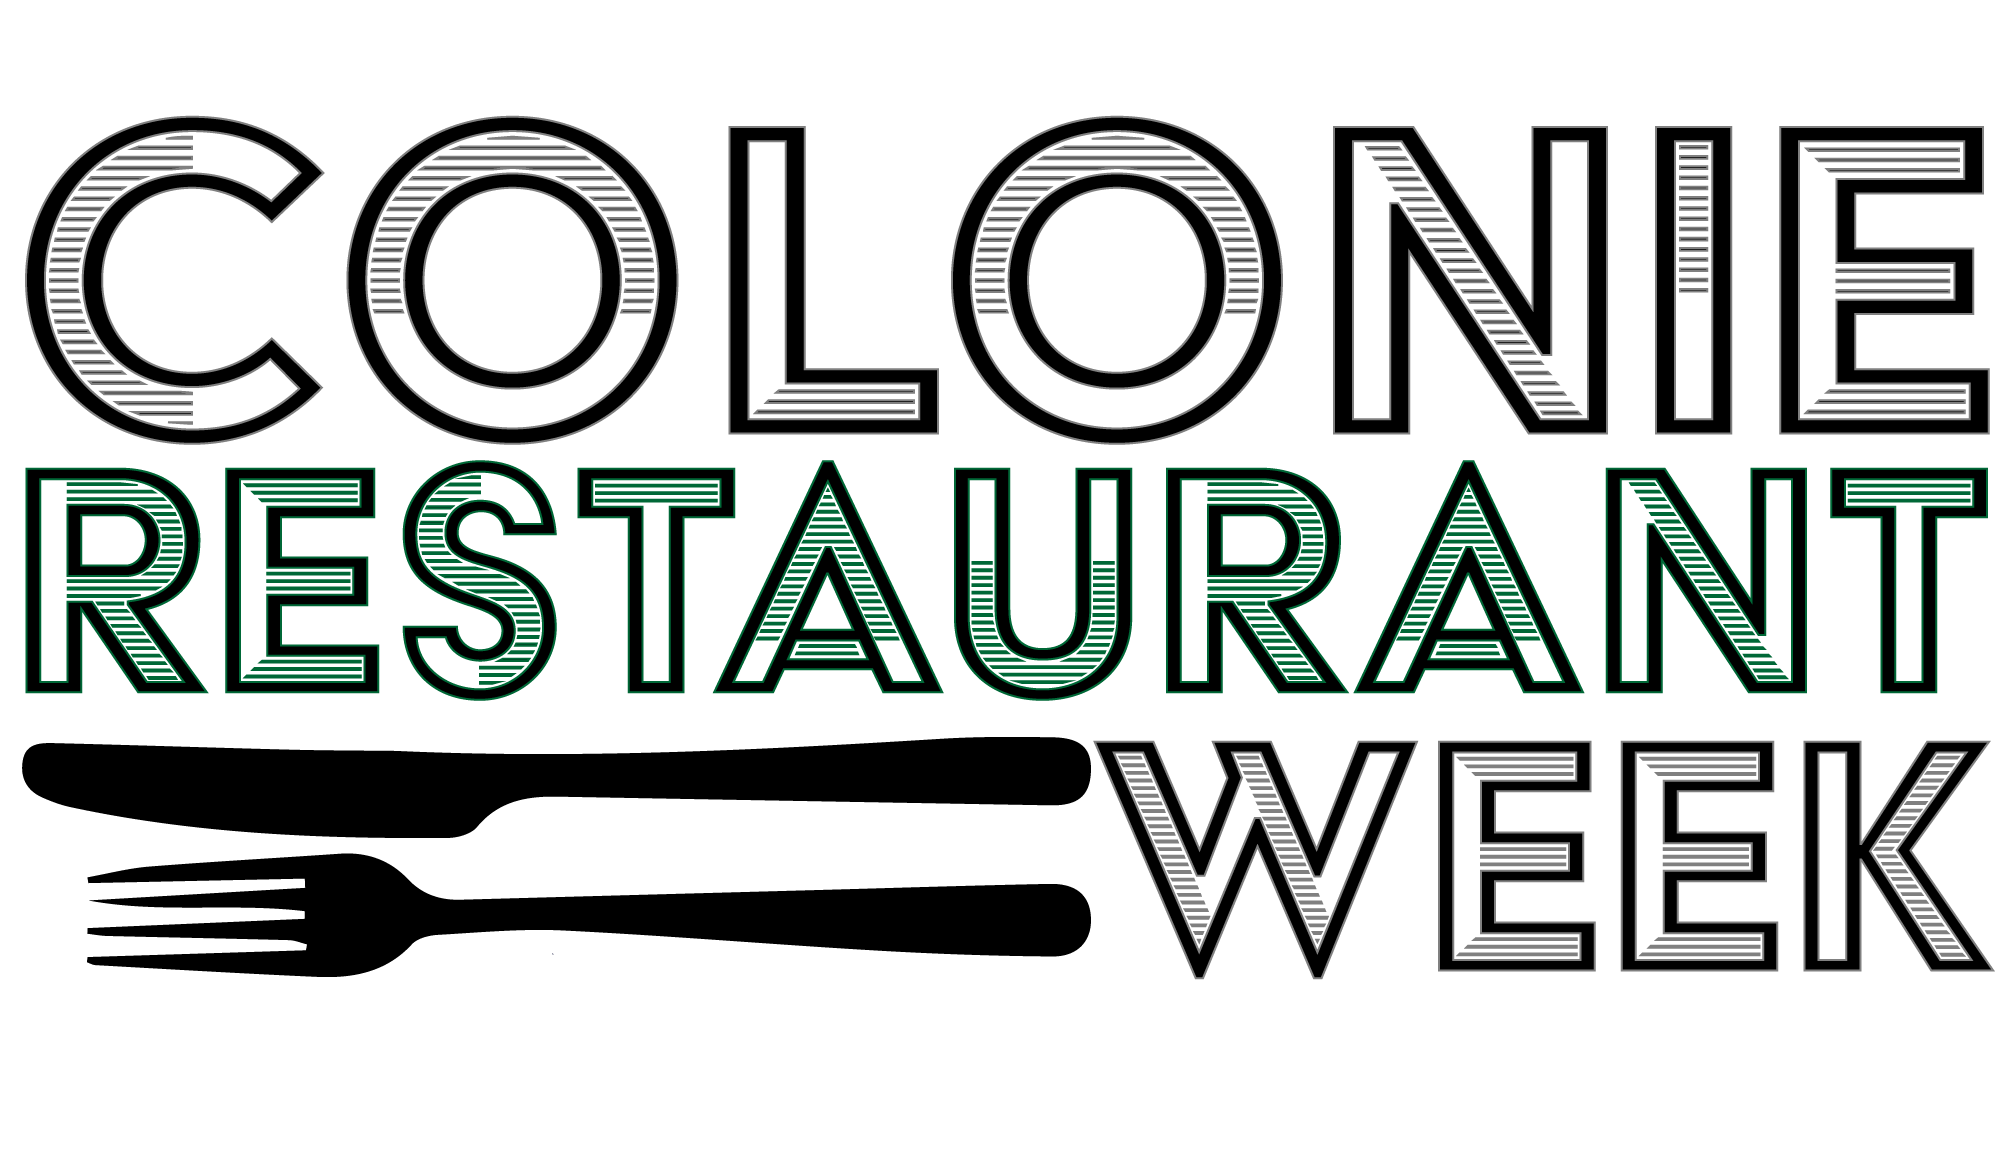 Colonie Restaurant Week Colonie Chamber of Commerce